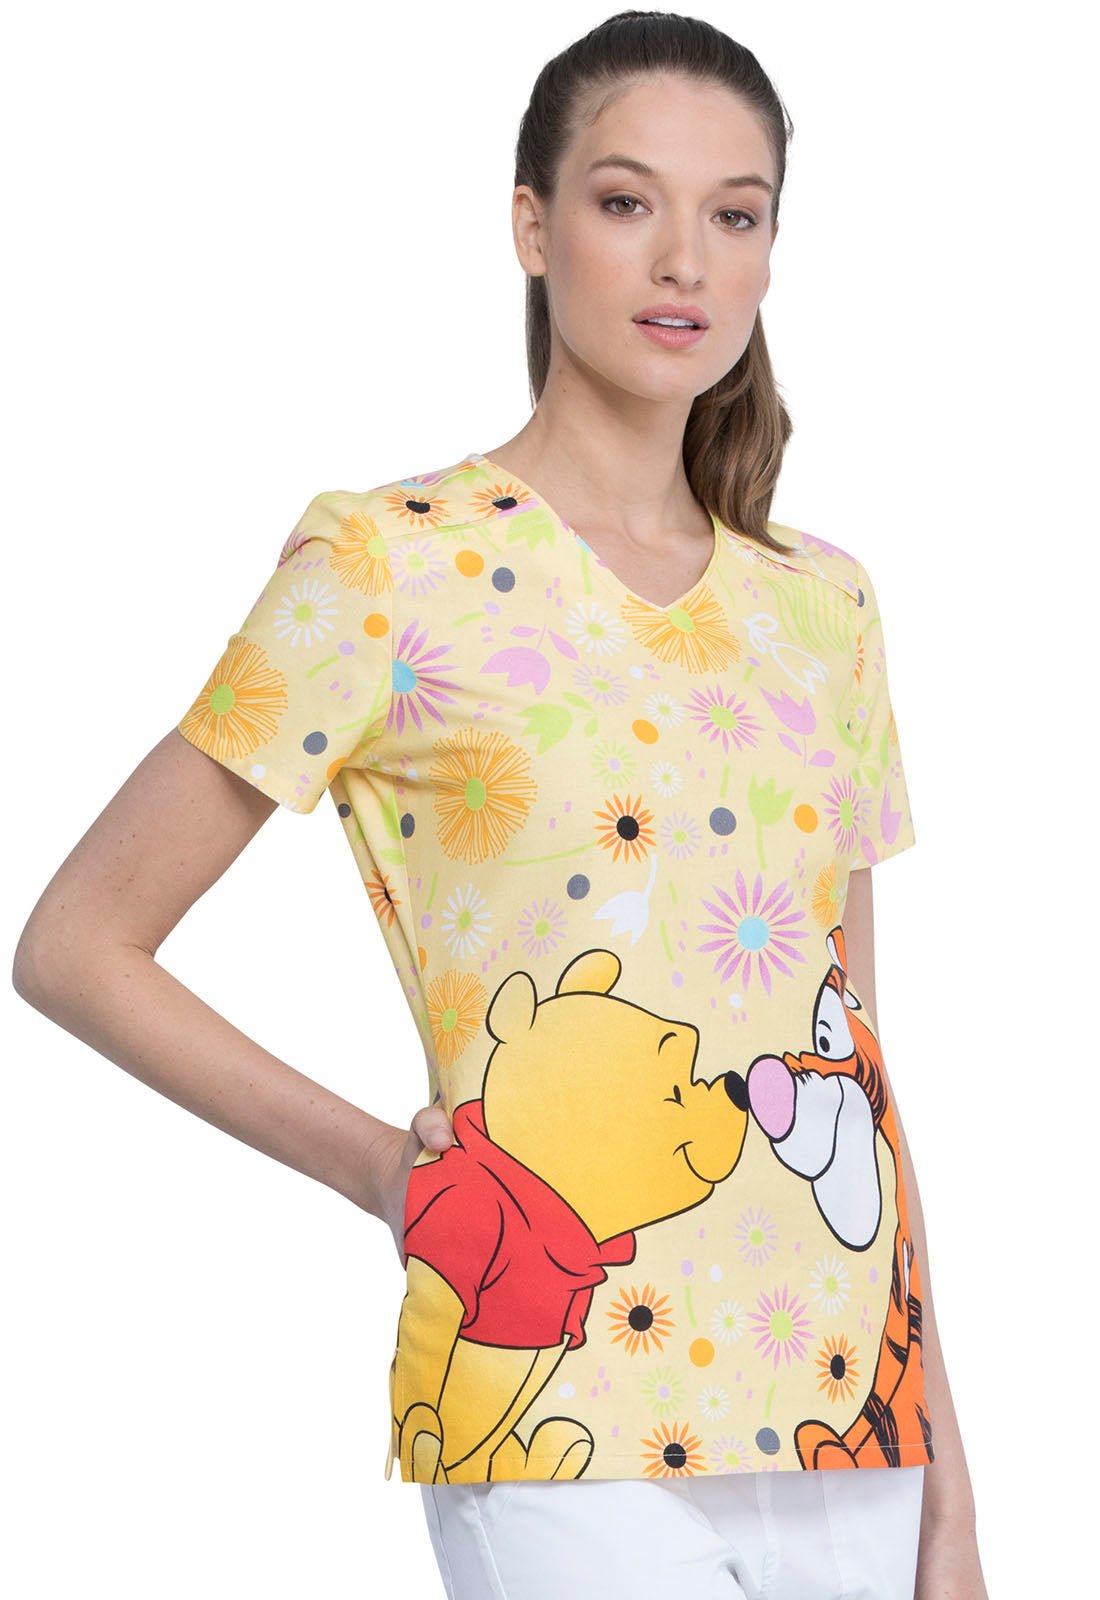 Winnie The Pooh Tooniforms Disney V Neck Scrub Top TF690 PHBT - Scrubs Select